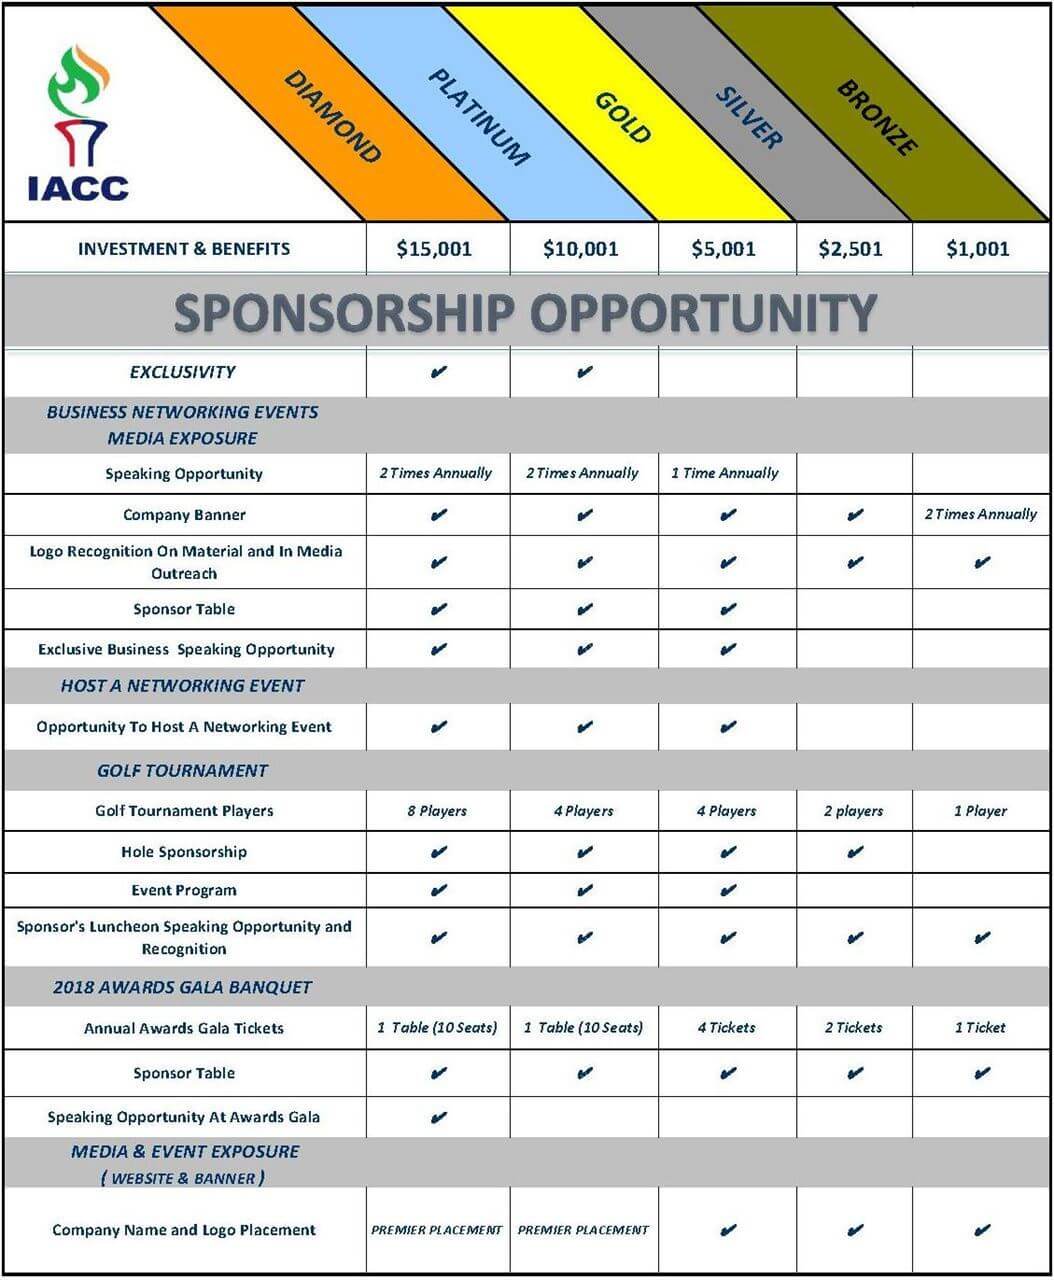 IACC 2018 Sponsorship Opportunites